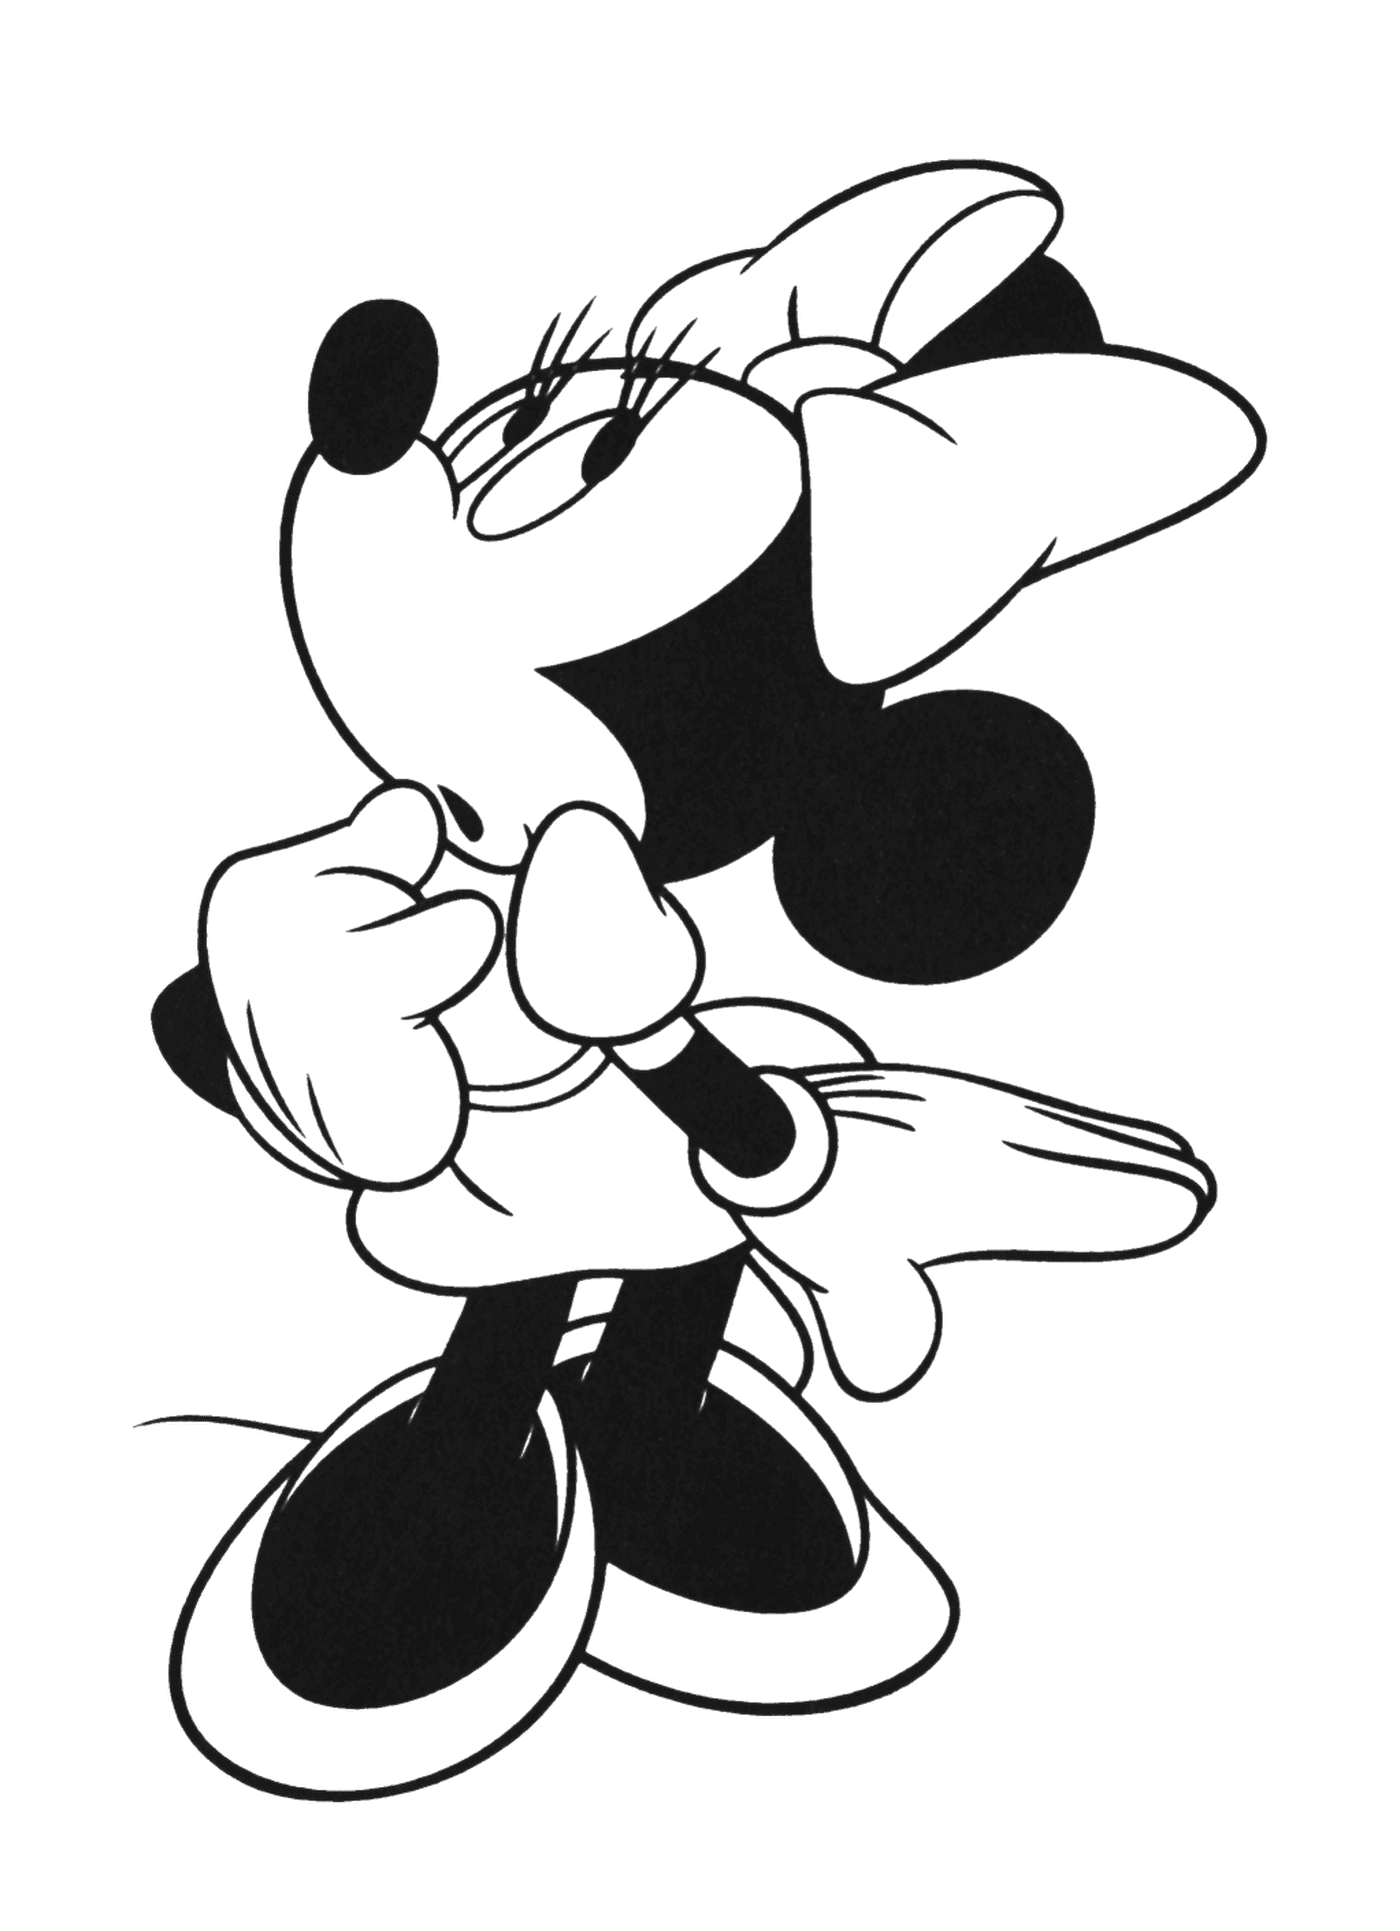  Mickey Mouse, Minnie's companion since 1928 